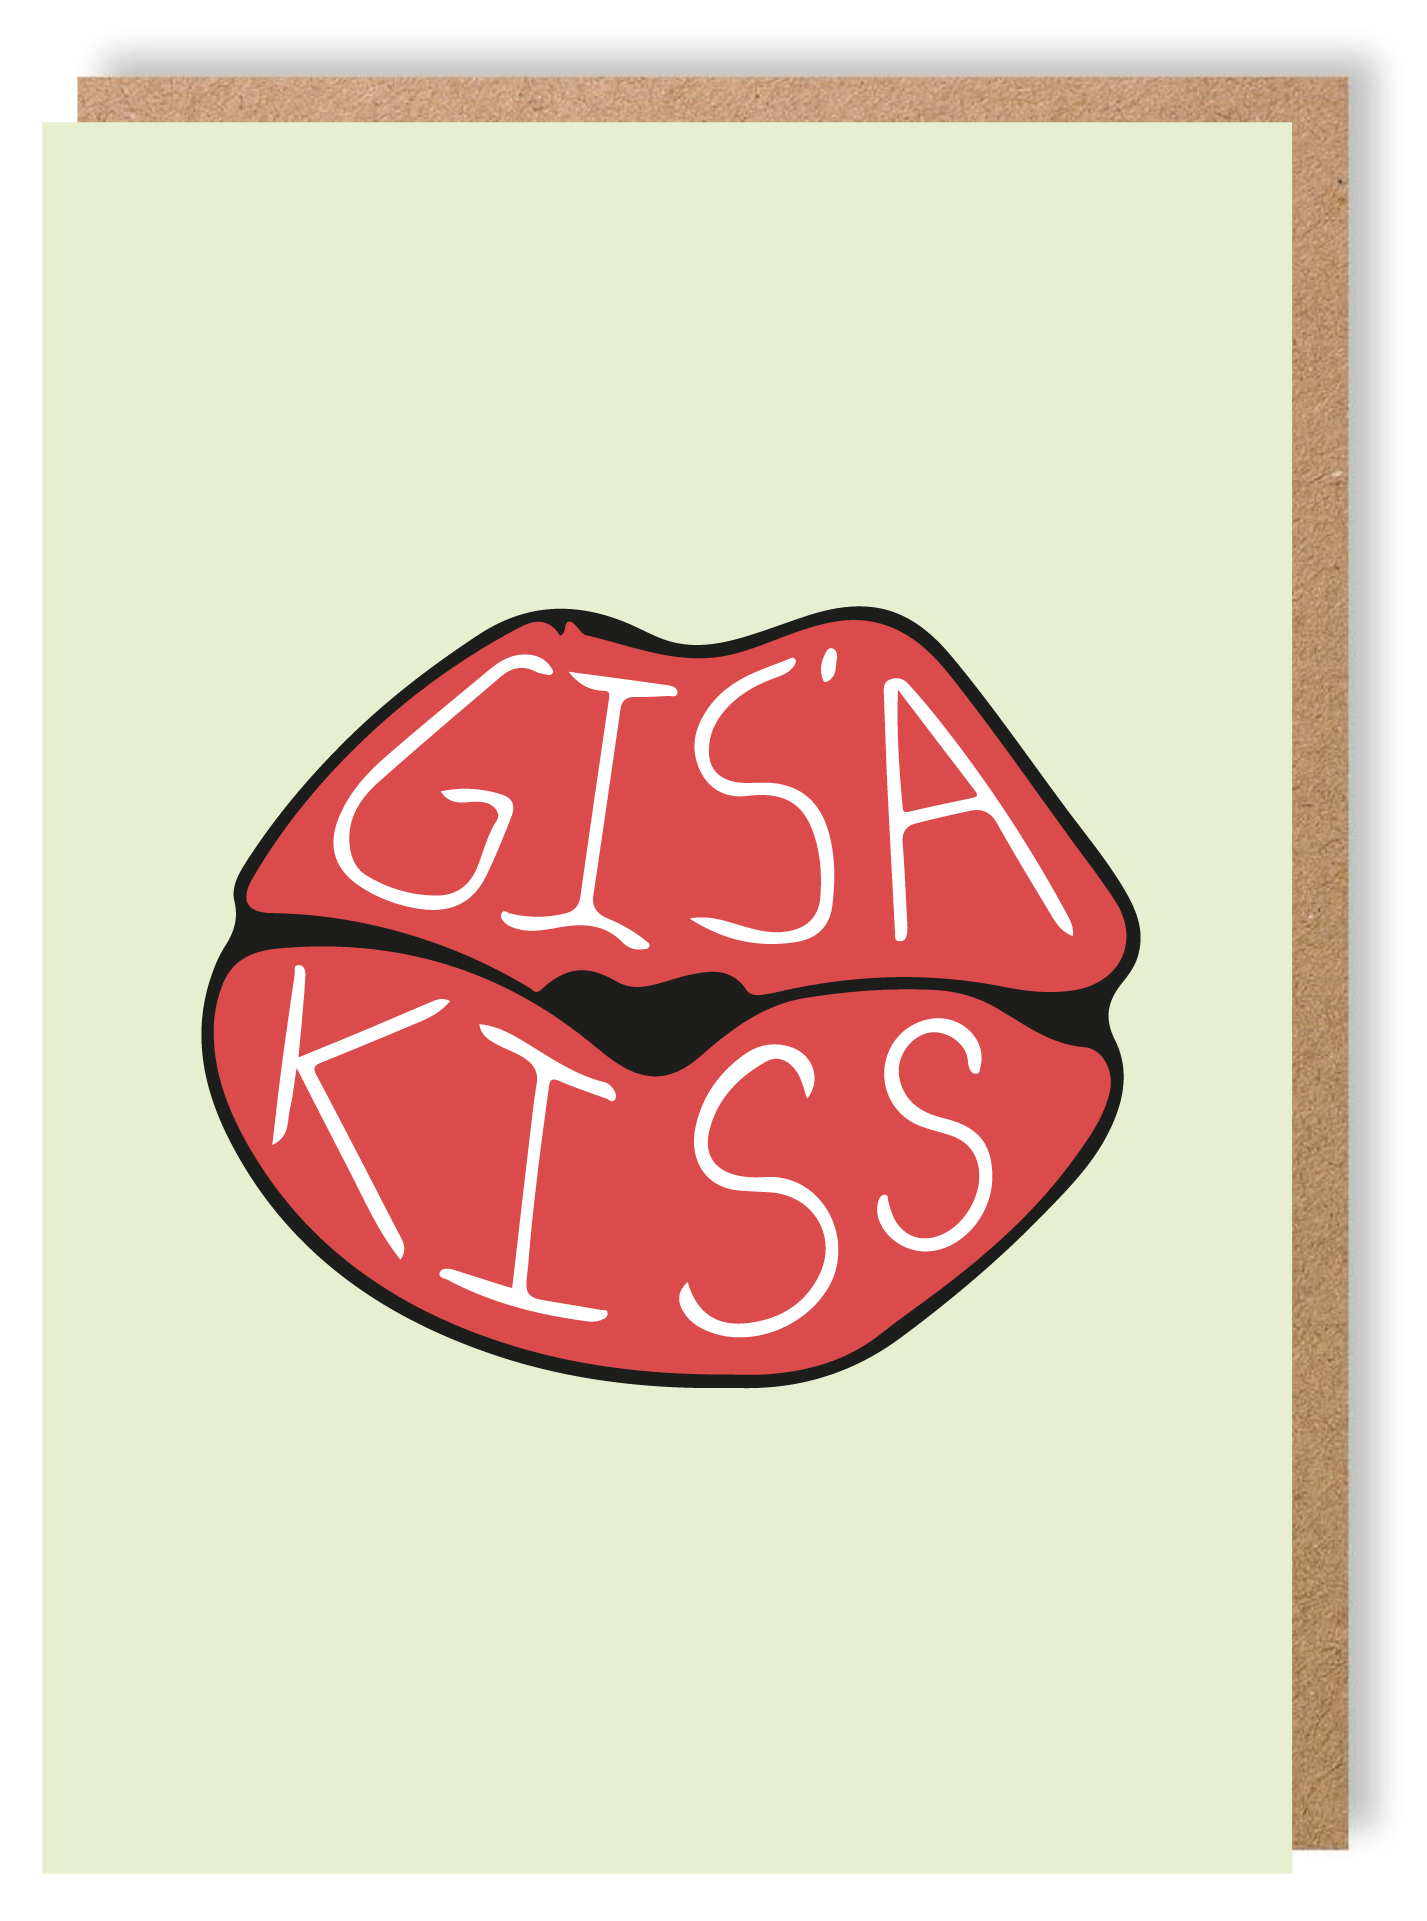 Gis A Kiss - Greetings Card - LukeHorton Art